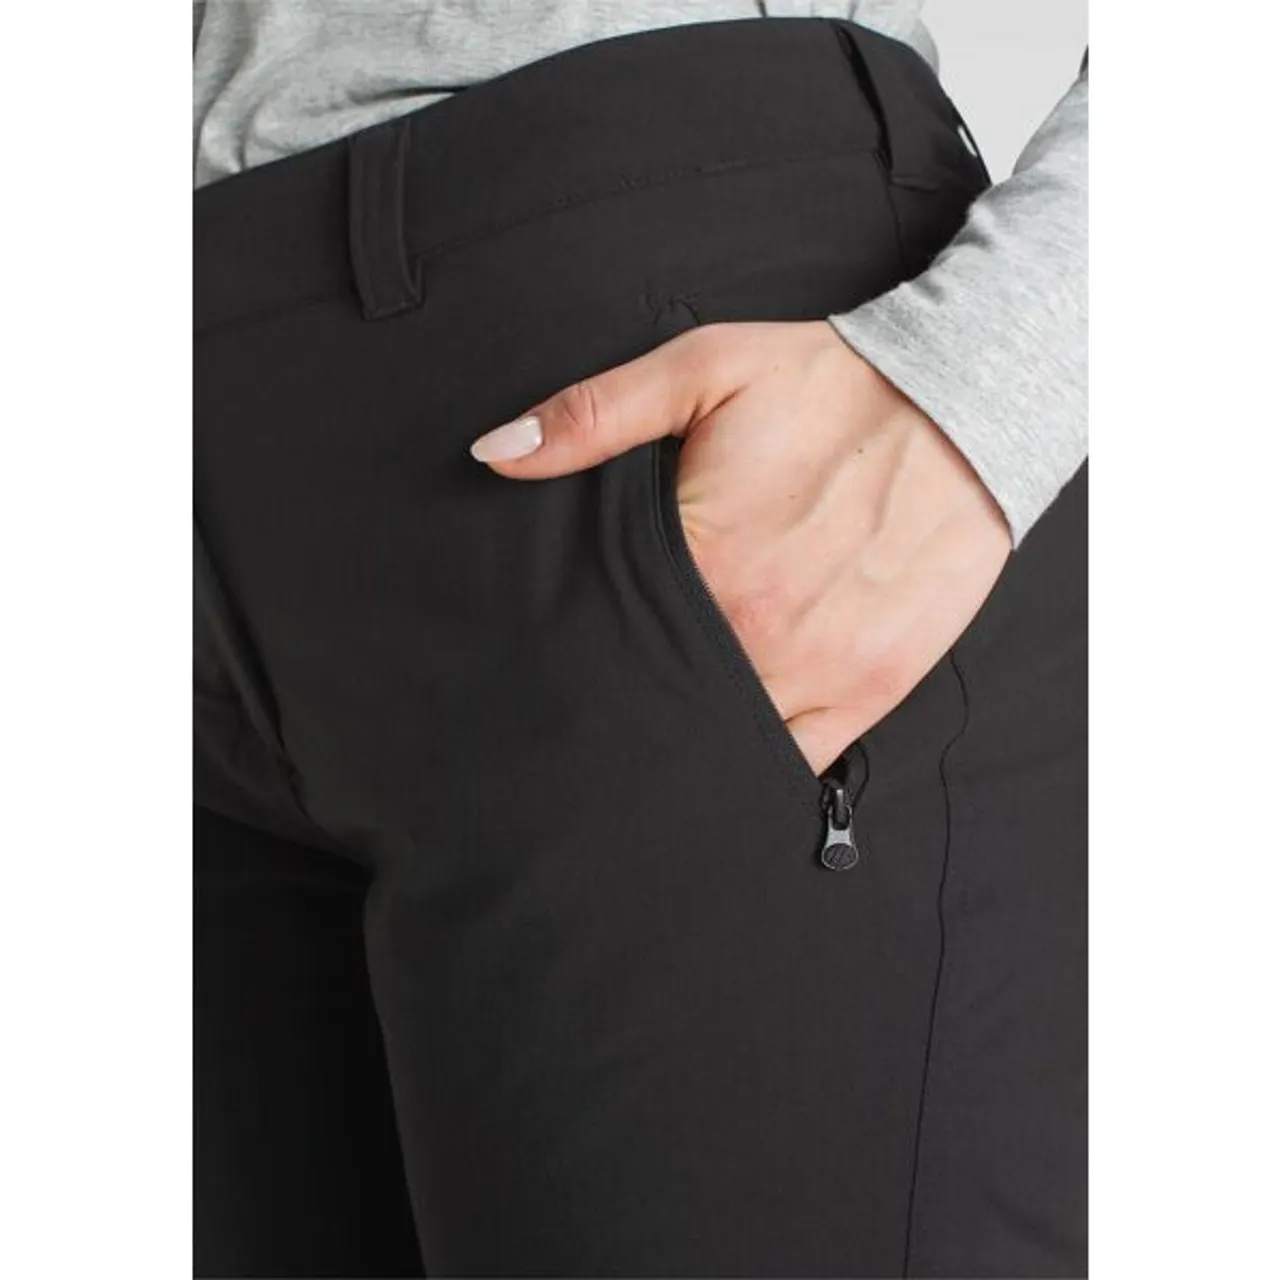 Outdoorhose MAIER SPORTS "wattierte Hose Damen" Gr. 50, N-Gr, schwarz (black) Damen Hosen Sporthosen